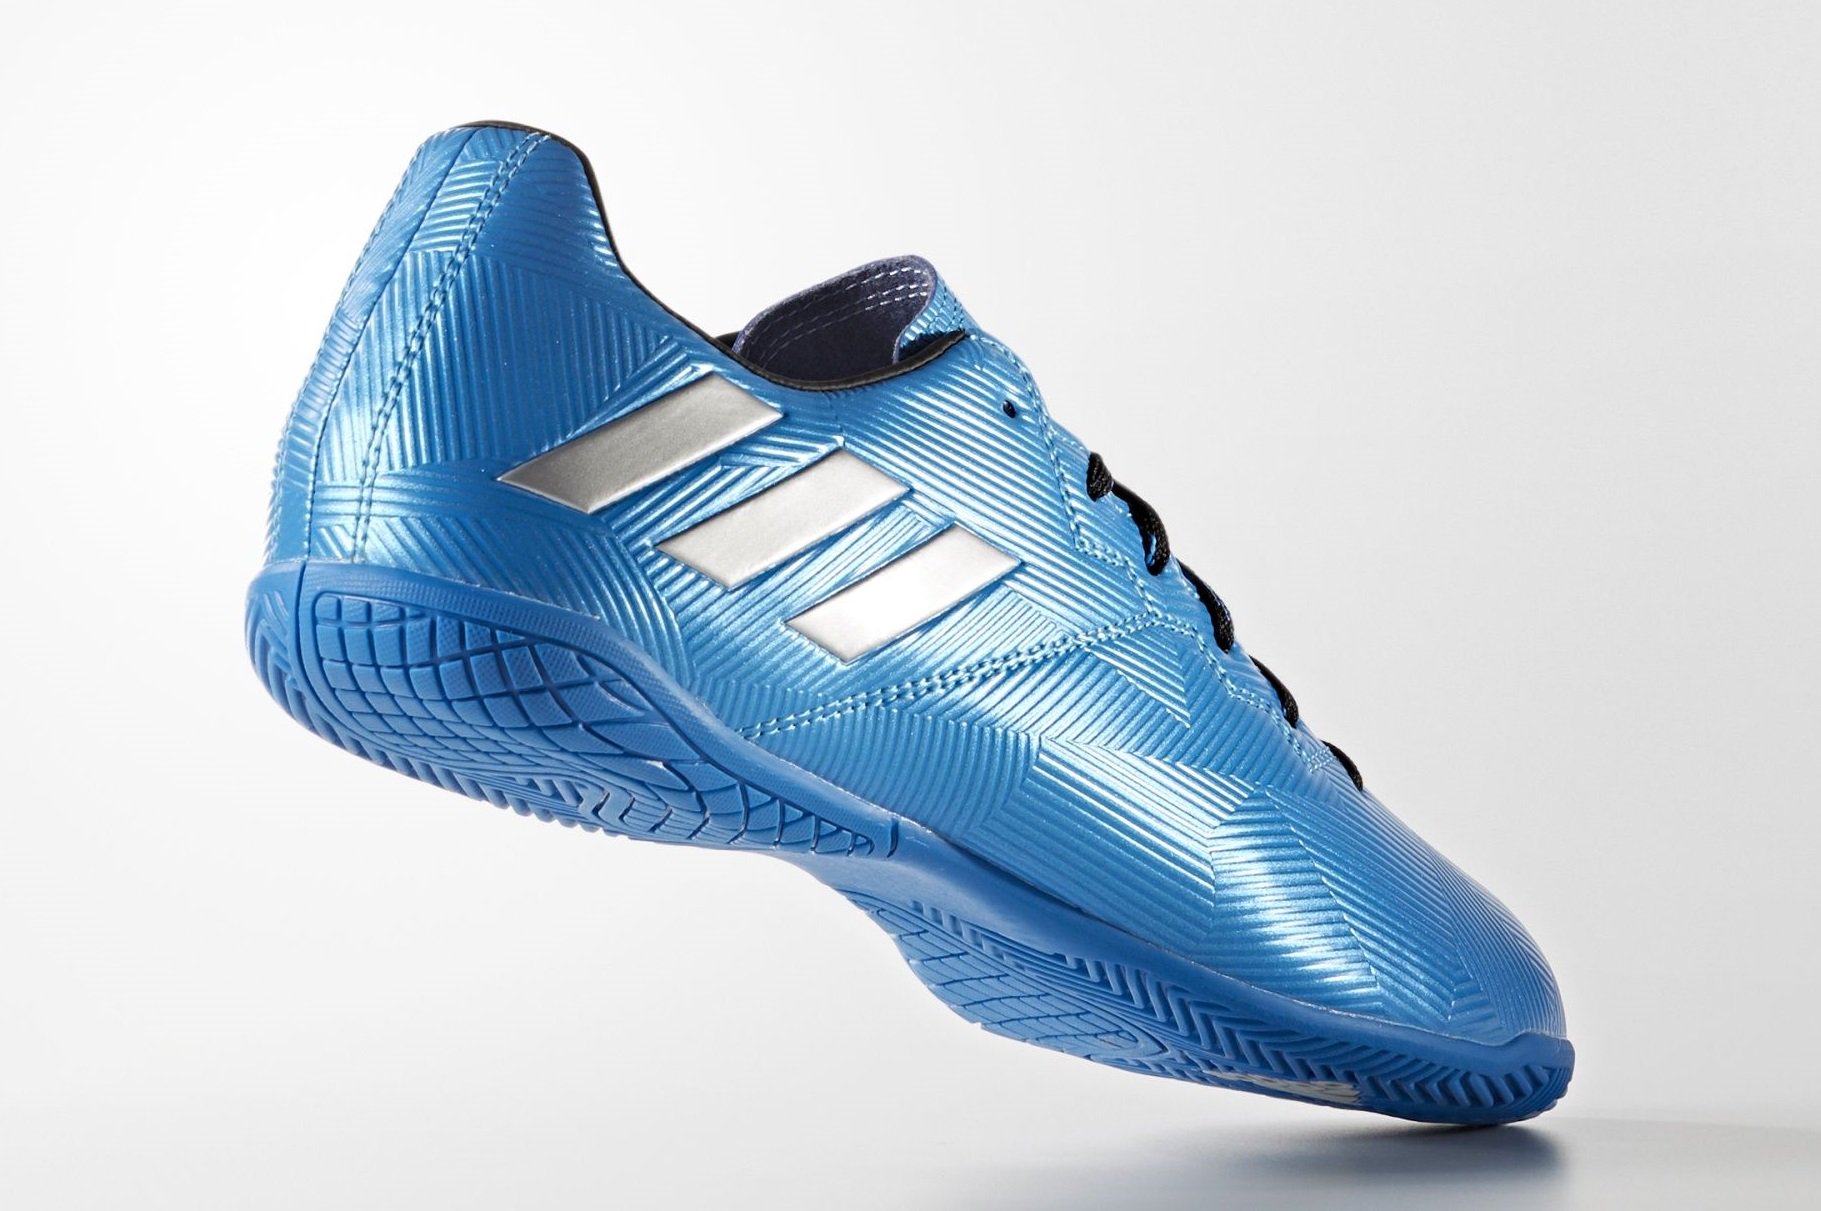 Boot Cleat on Twitter: "Adidas Messi 16.4 Indoor 16-17 Blue Shoes #adidas #indoor https://t.co/JFhxfZM2iX https://t.co/CQXL8OCFU0" Twitter